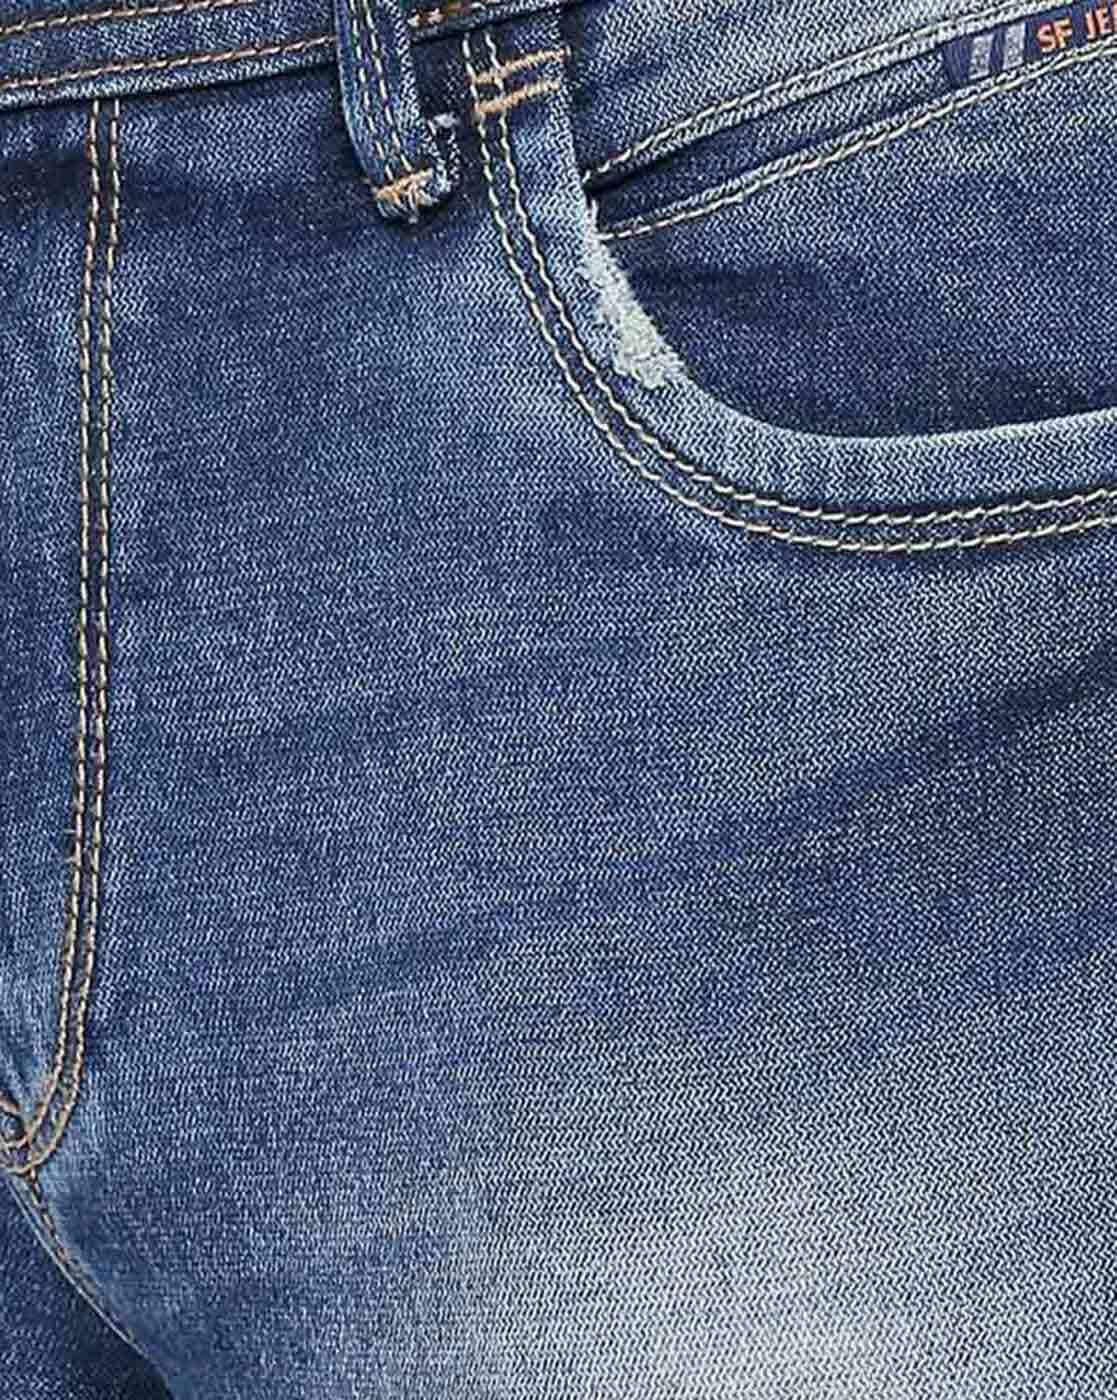 Bare Denim Shirt Pantaloons Overview - YouTube